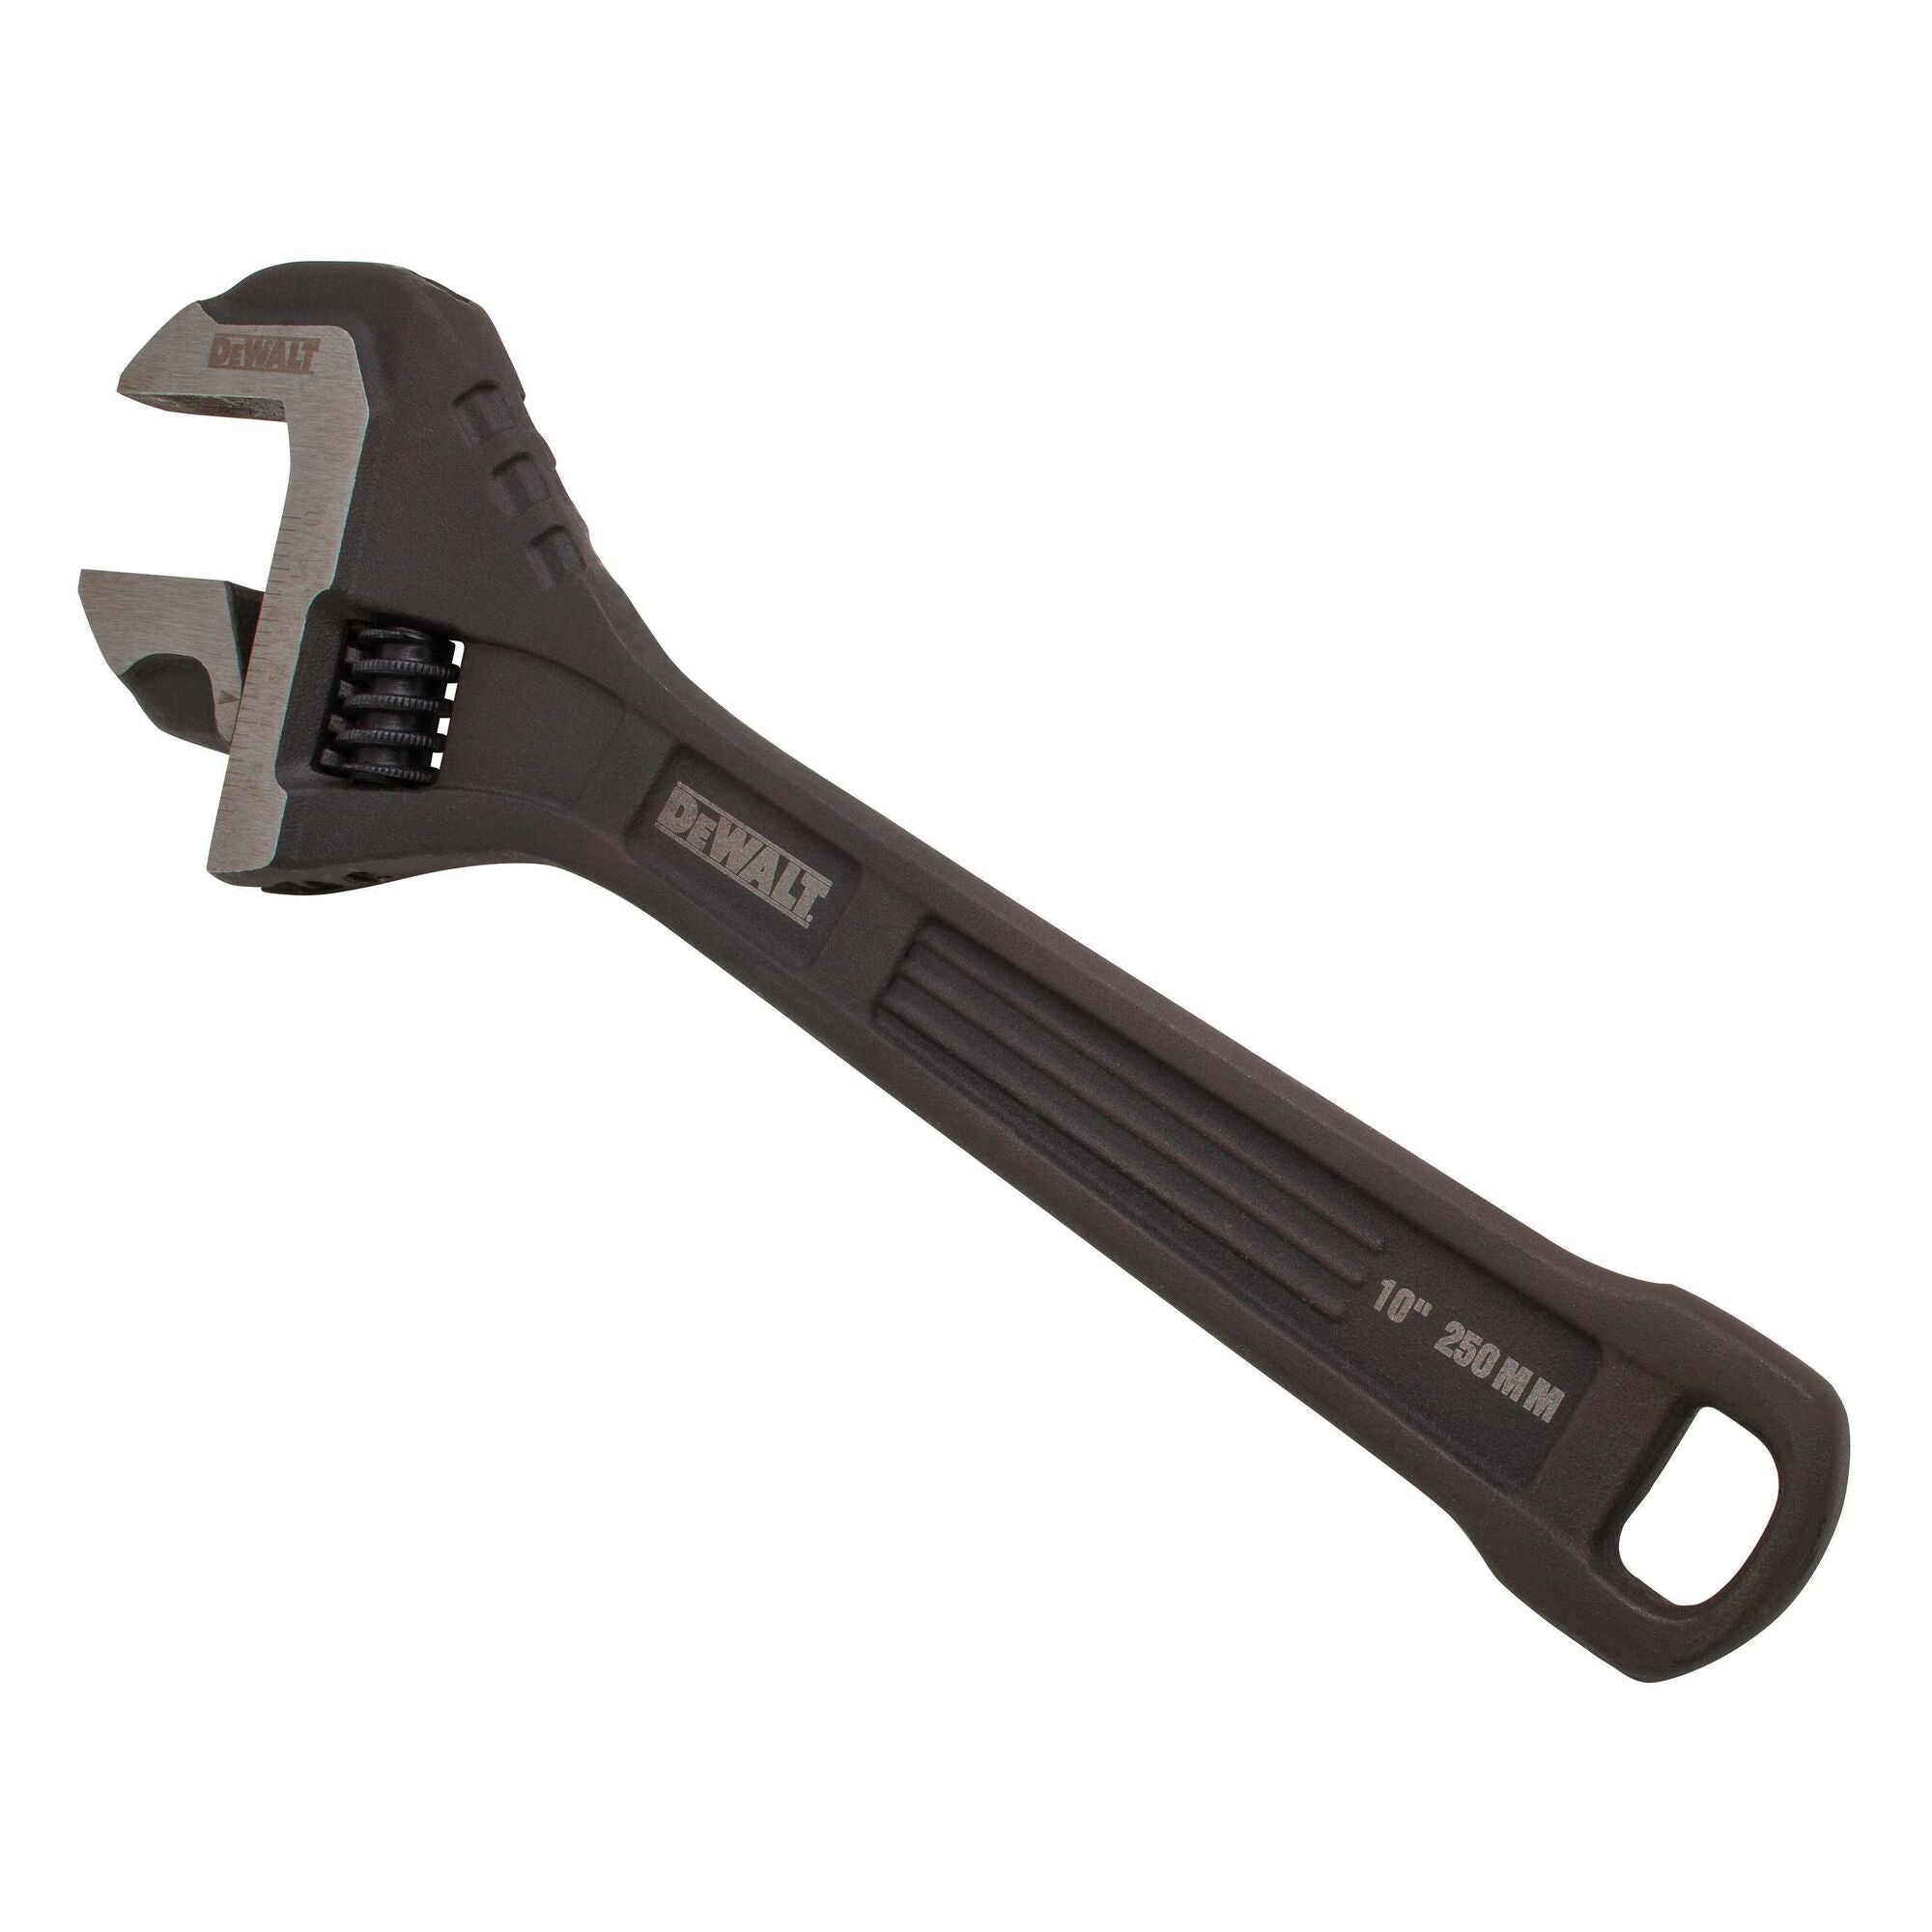 DeWALT Adjustable Steel Wrench 10"